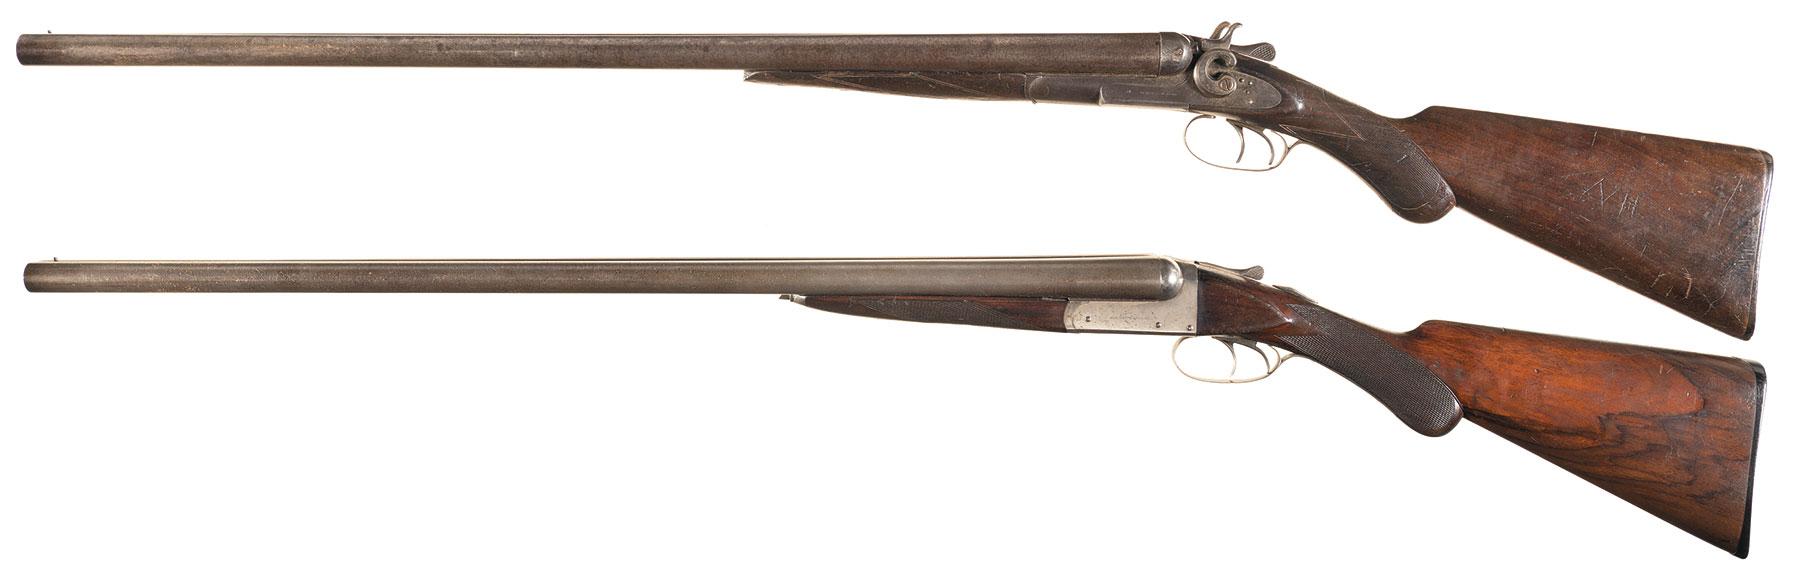 Two Remington Double Barrel Shotguns